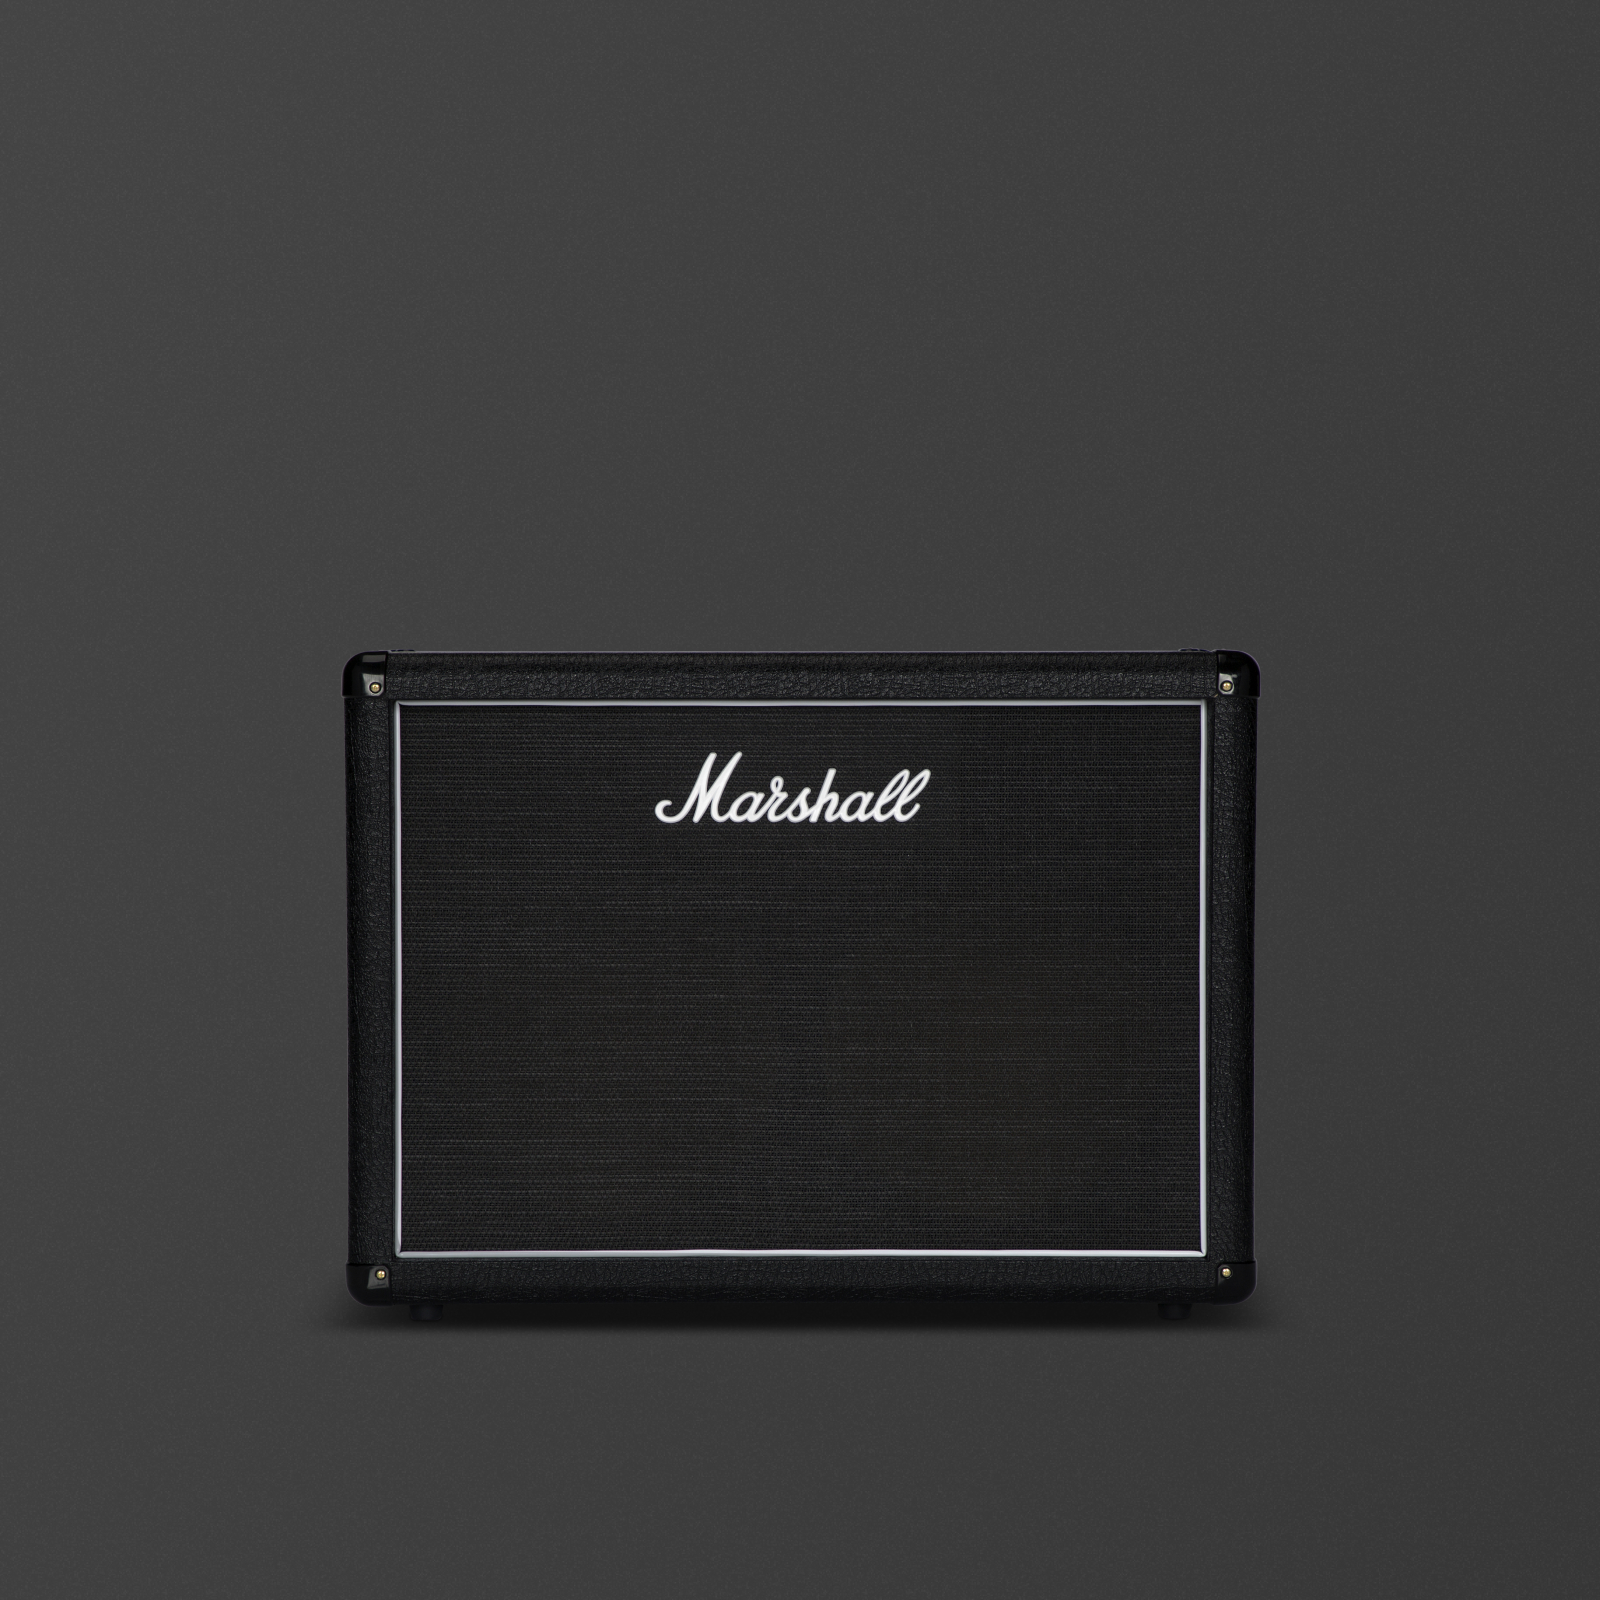 Marshall MX212 schwarzes Gehäuse.